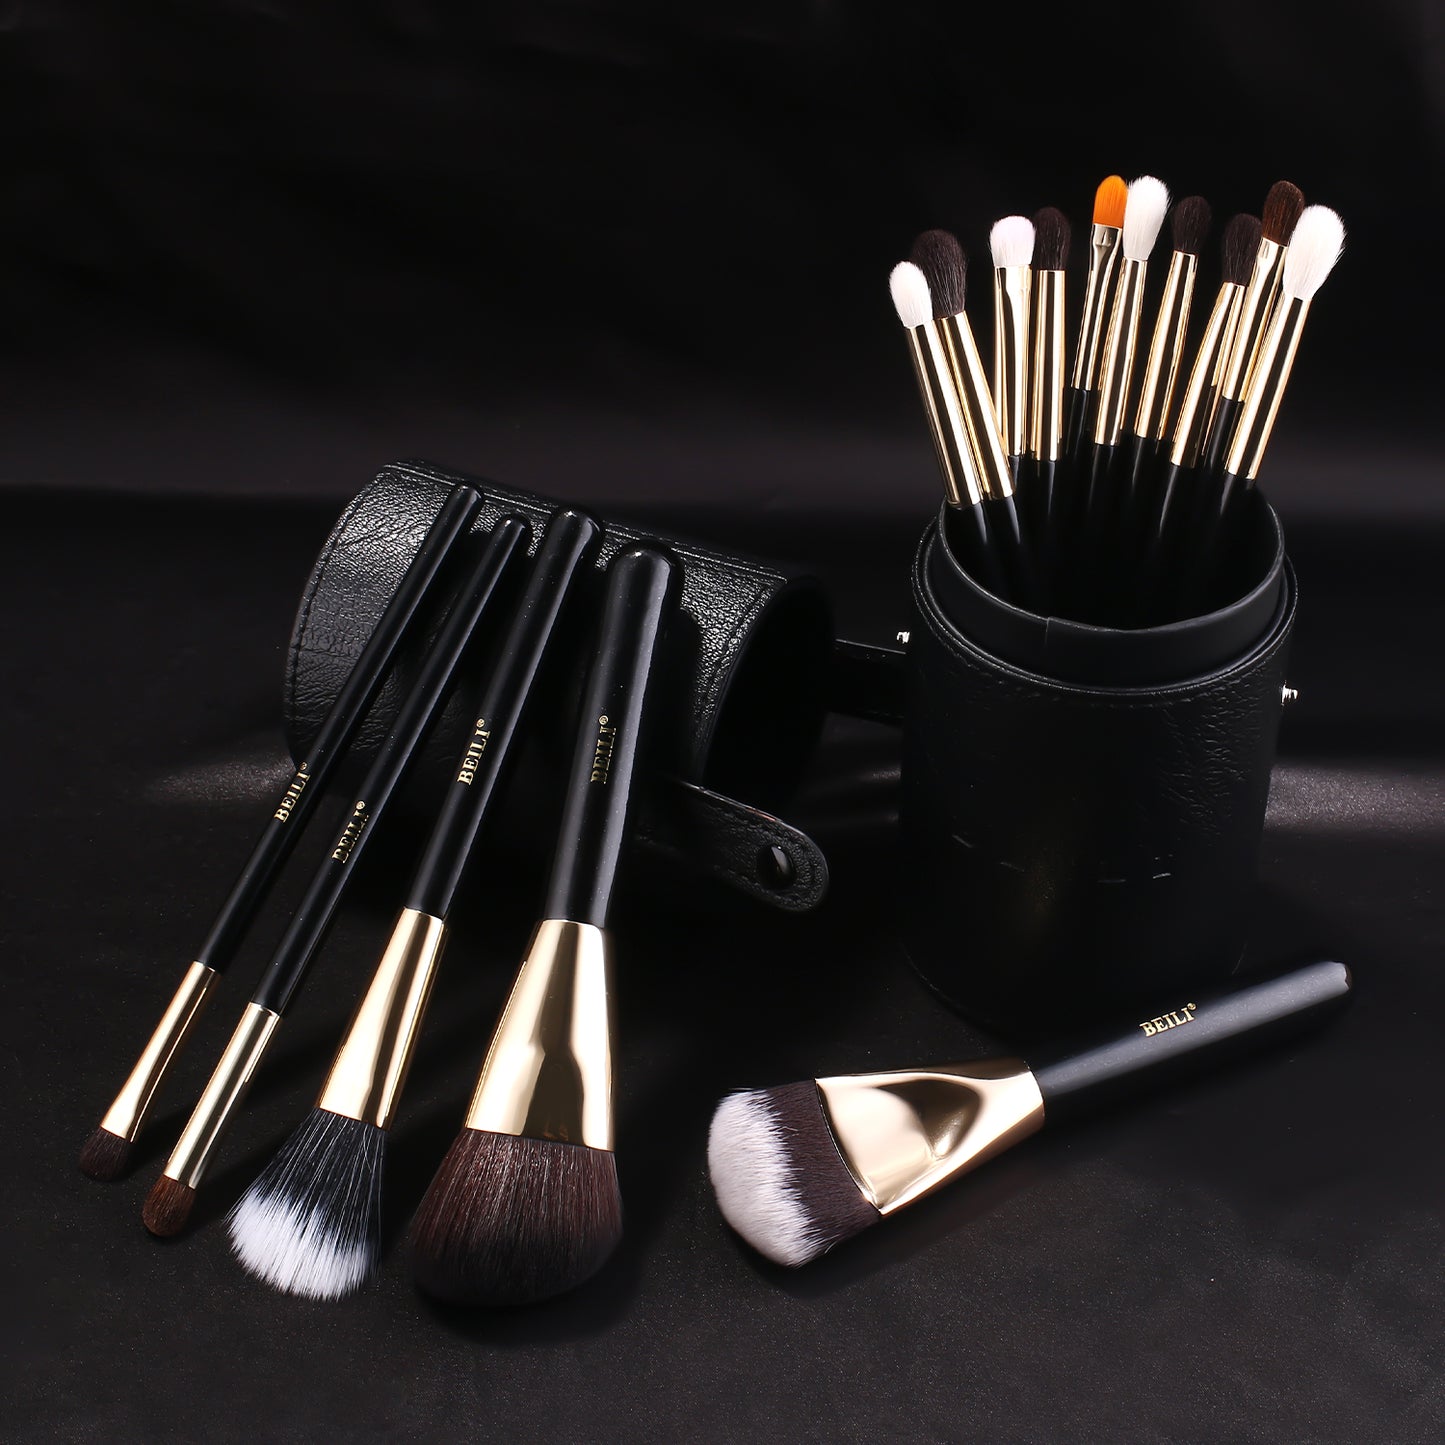 BEILI 15Pcs Everyday Essential Makeup Brush Set  GB15/GB15 With Holder